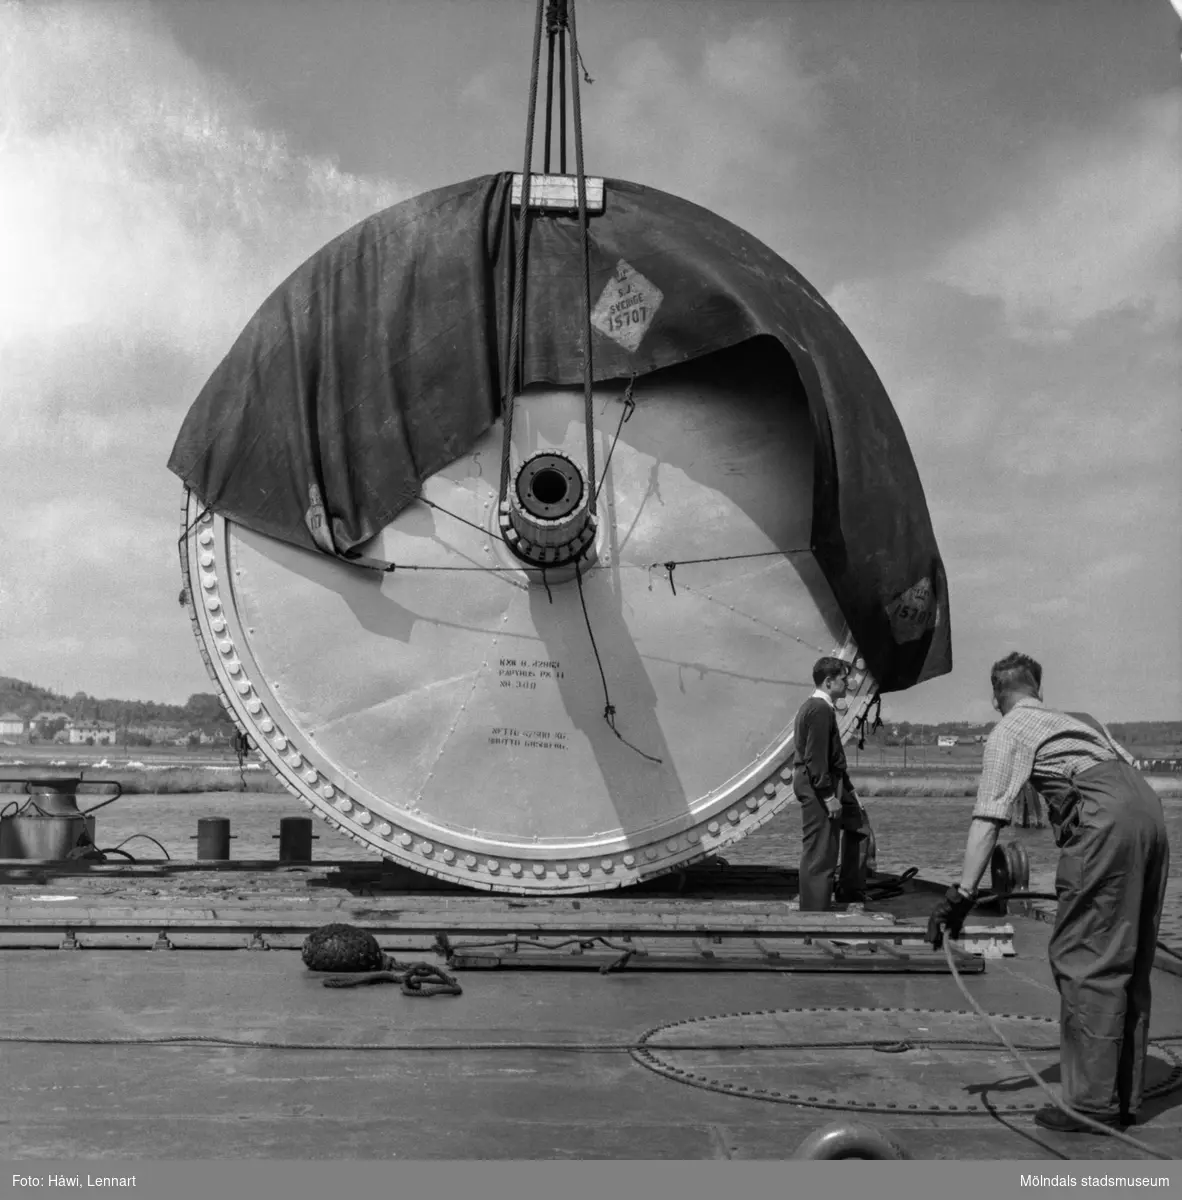 Transport av pappersbruket Papyrus PM2 yankeecylinder. Cylindern fraktas med flytande lyftkran i Göteborgs hamn, 2/6 1956.